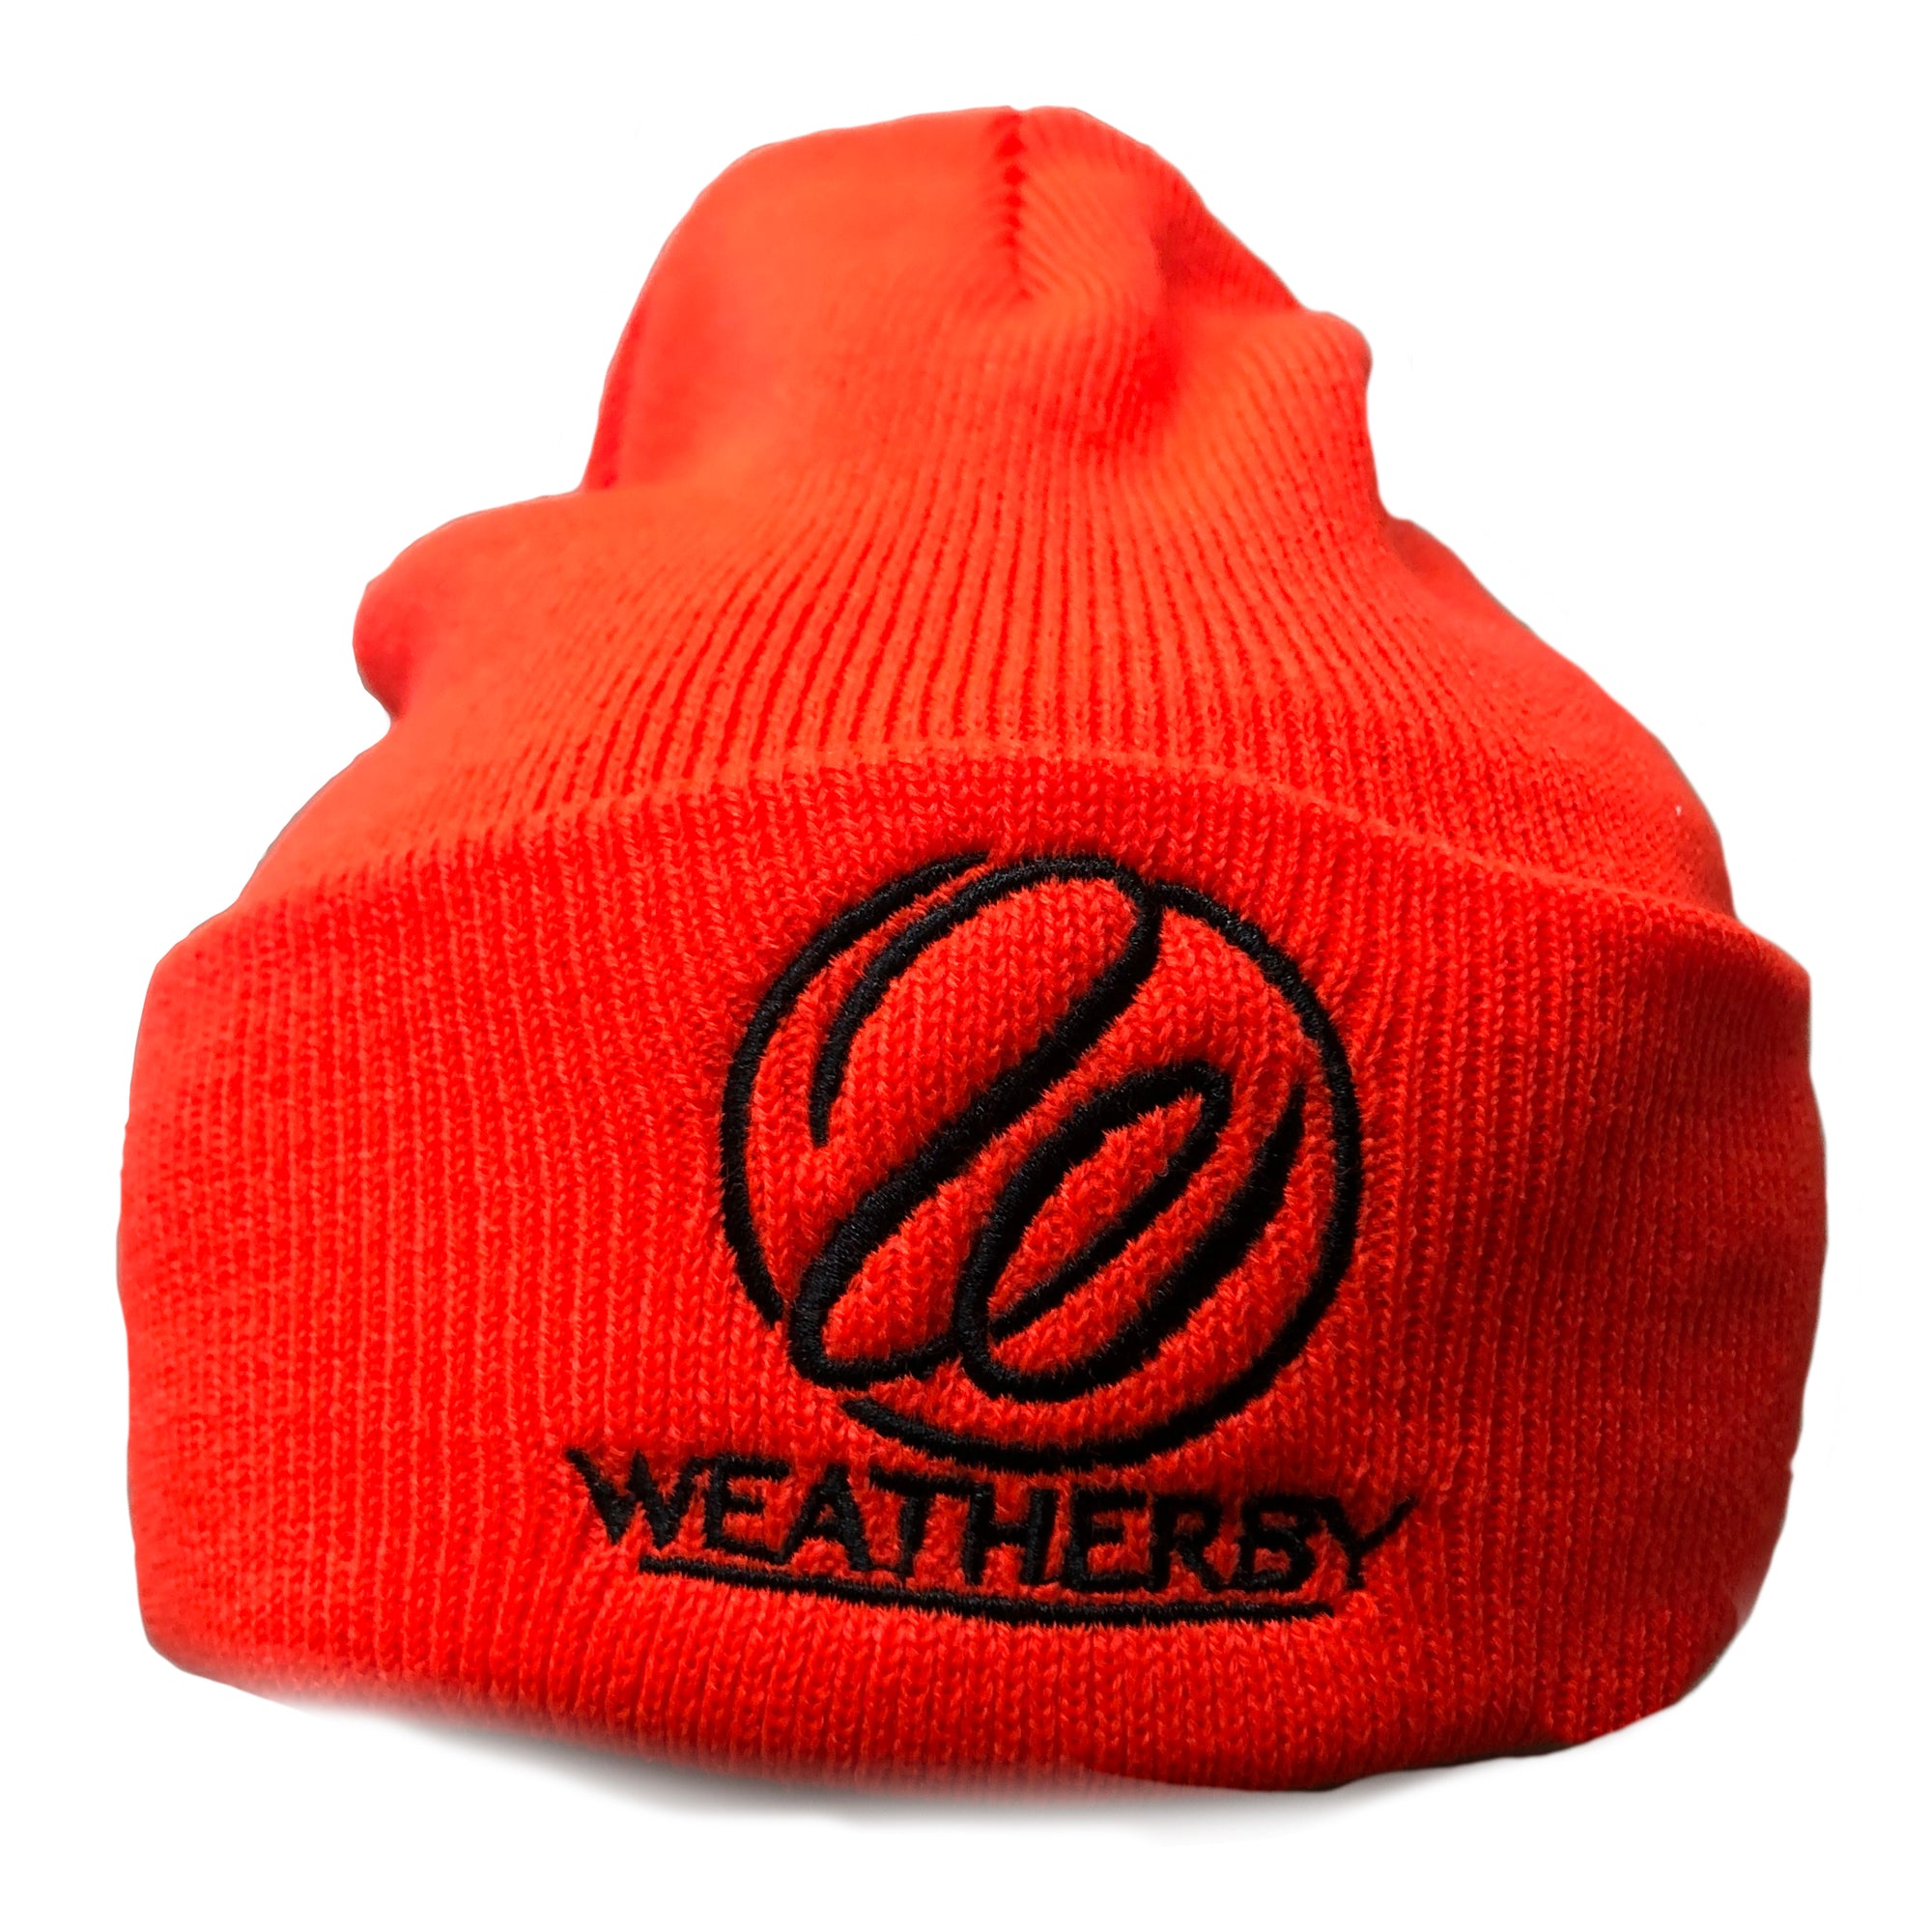 Weatherby Orange Beanie